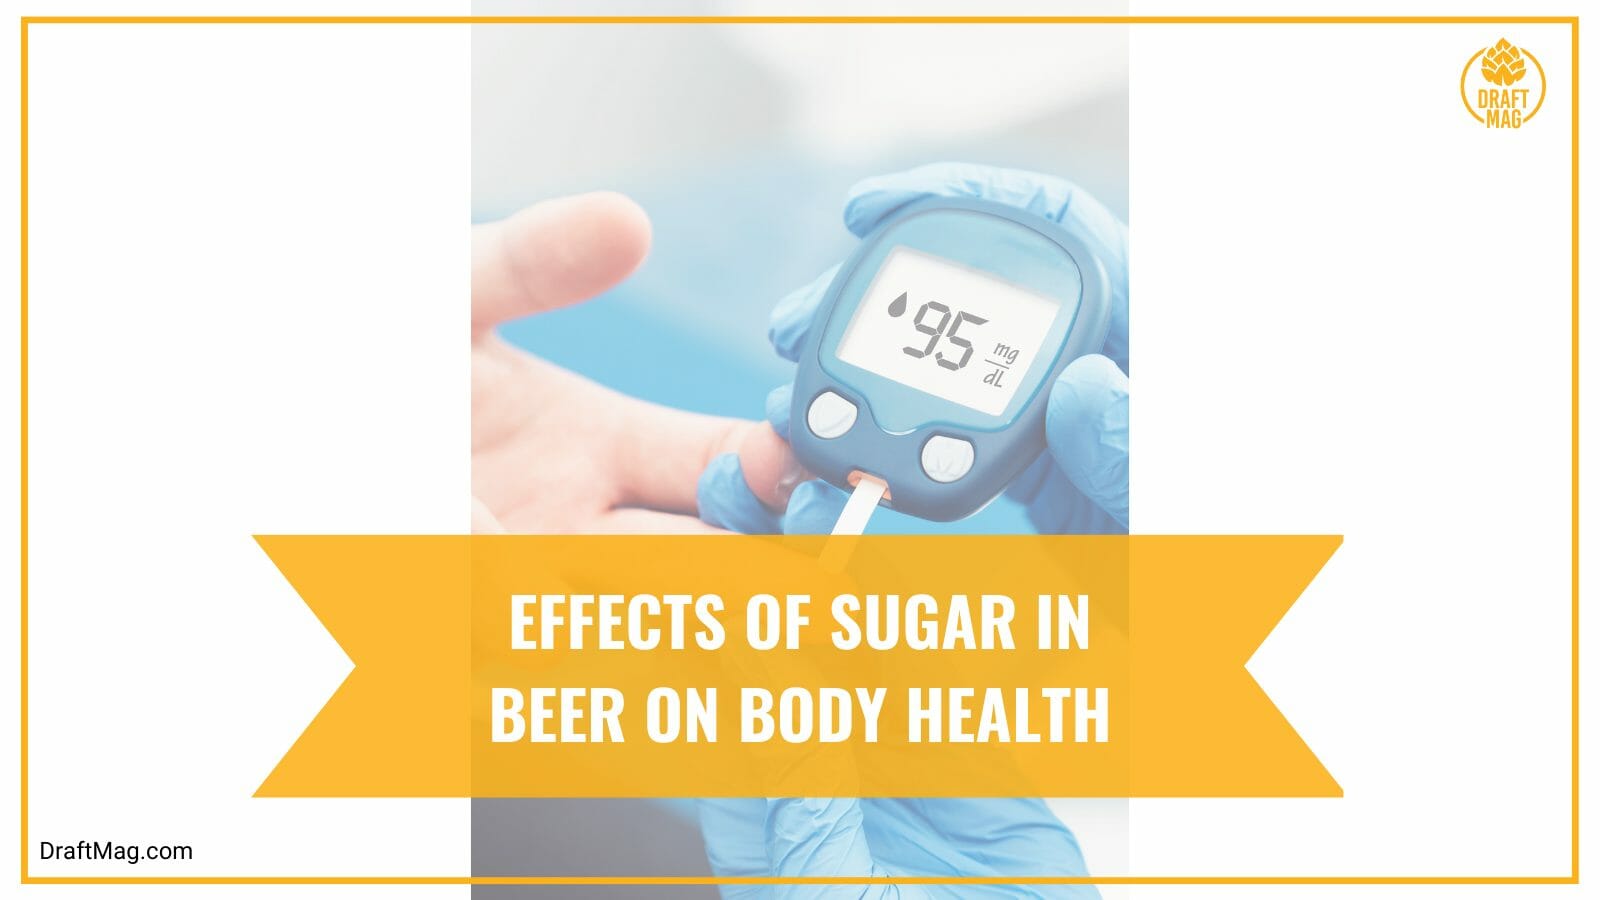 Effects of sugar in beer on health